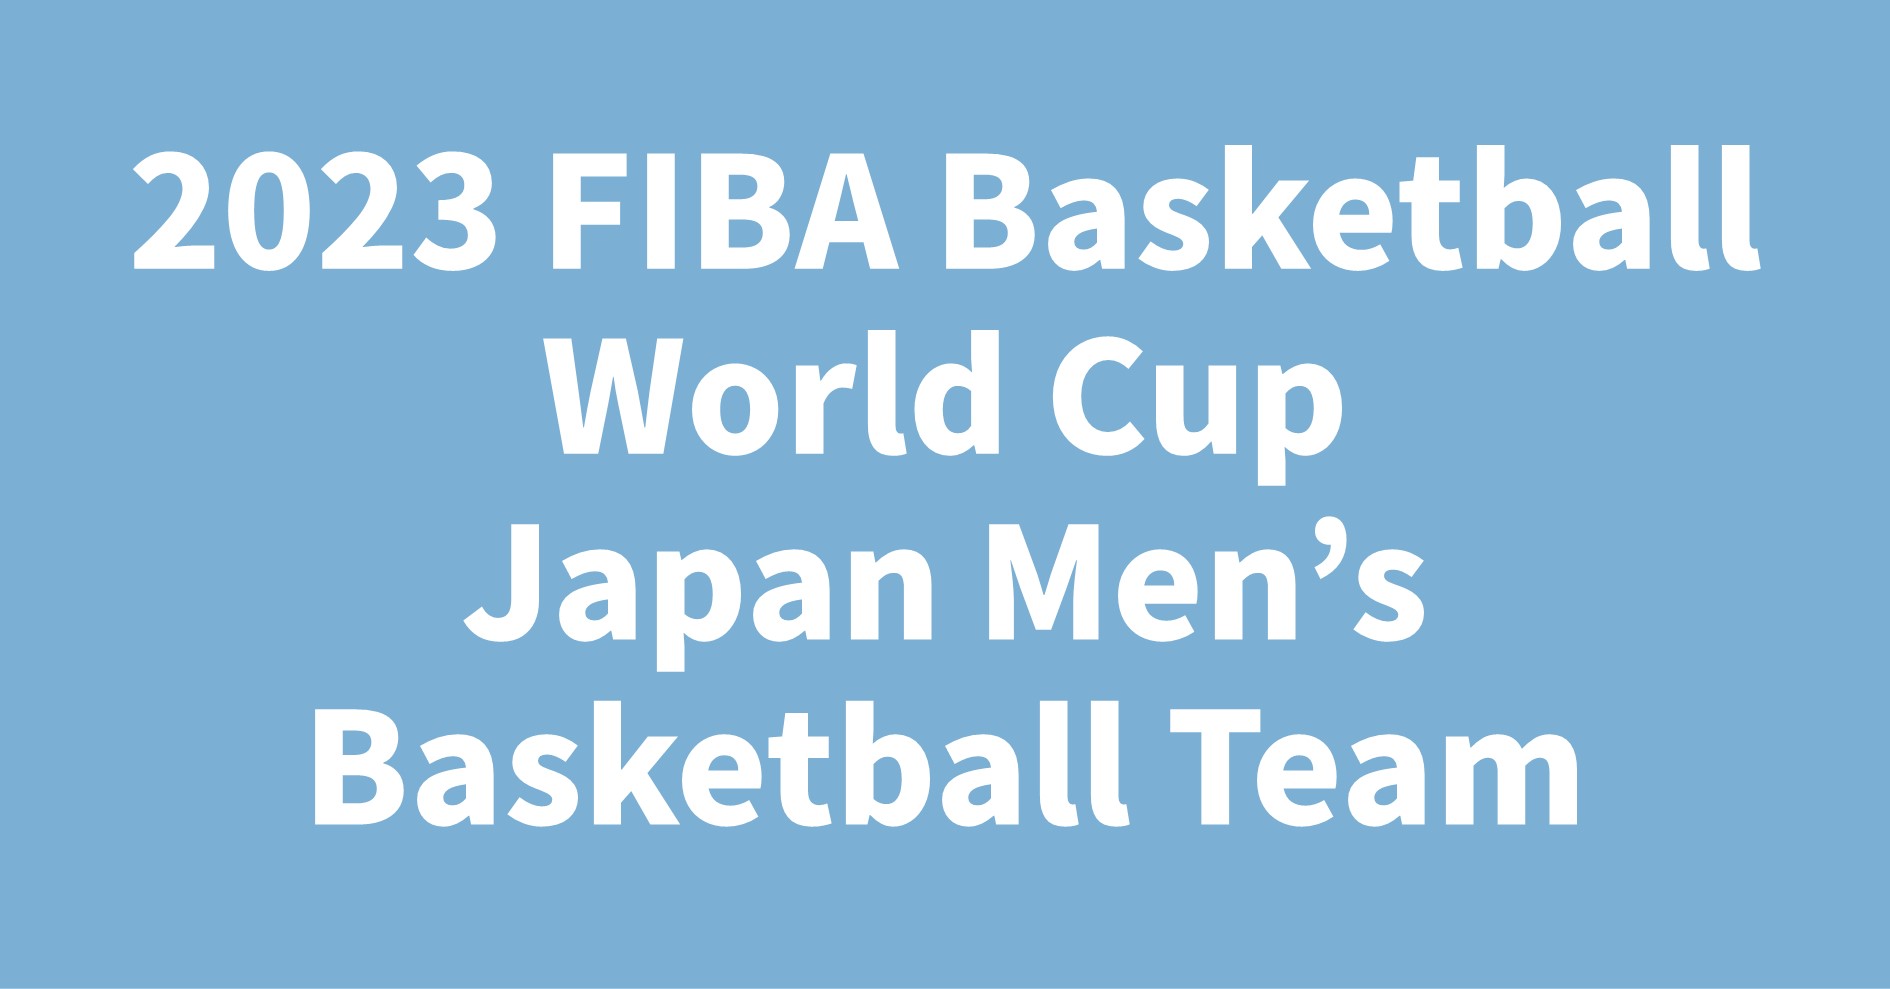 2023 FIBA Basketball World Cup Japan Men's Basketball Team